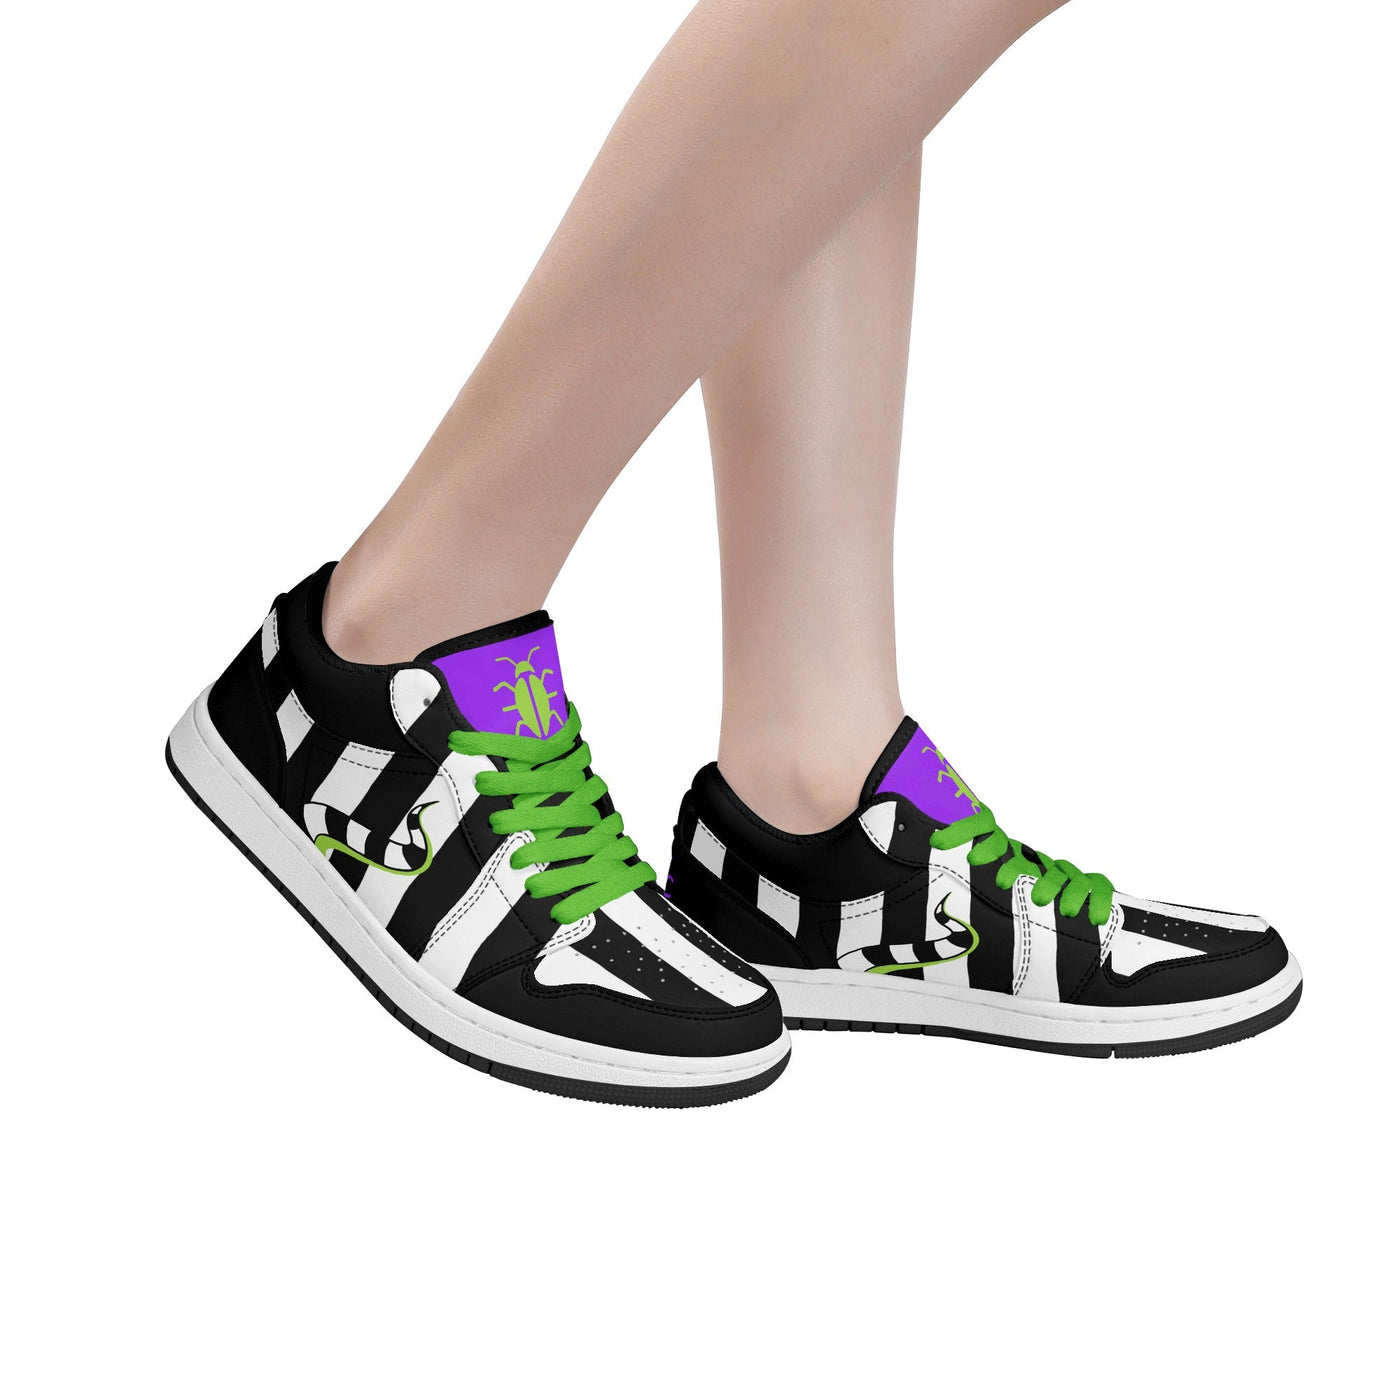 Beetlejuice & Sandworm Low Tops Skateboard Sneakers V2 (Women's Sizes)